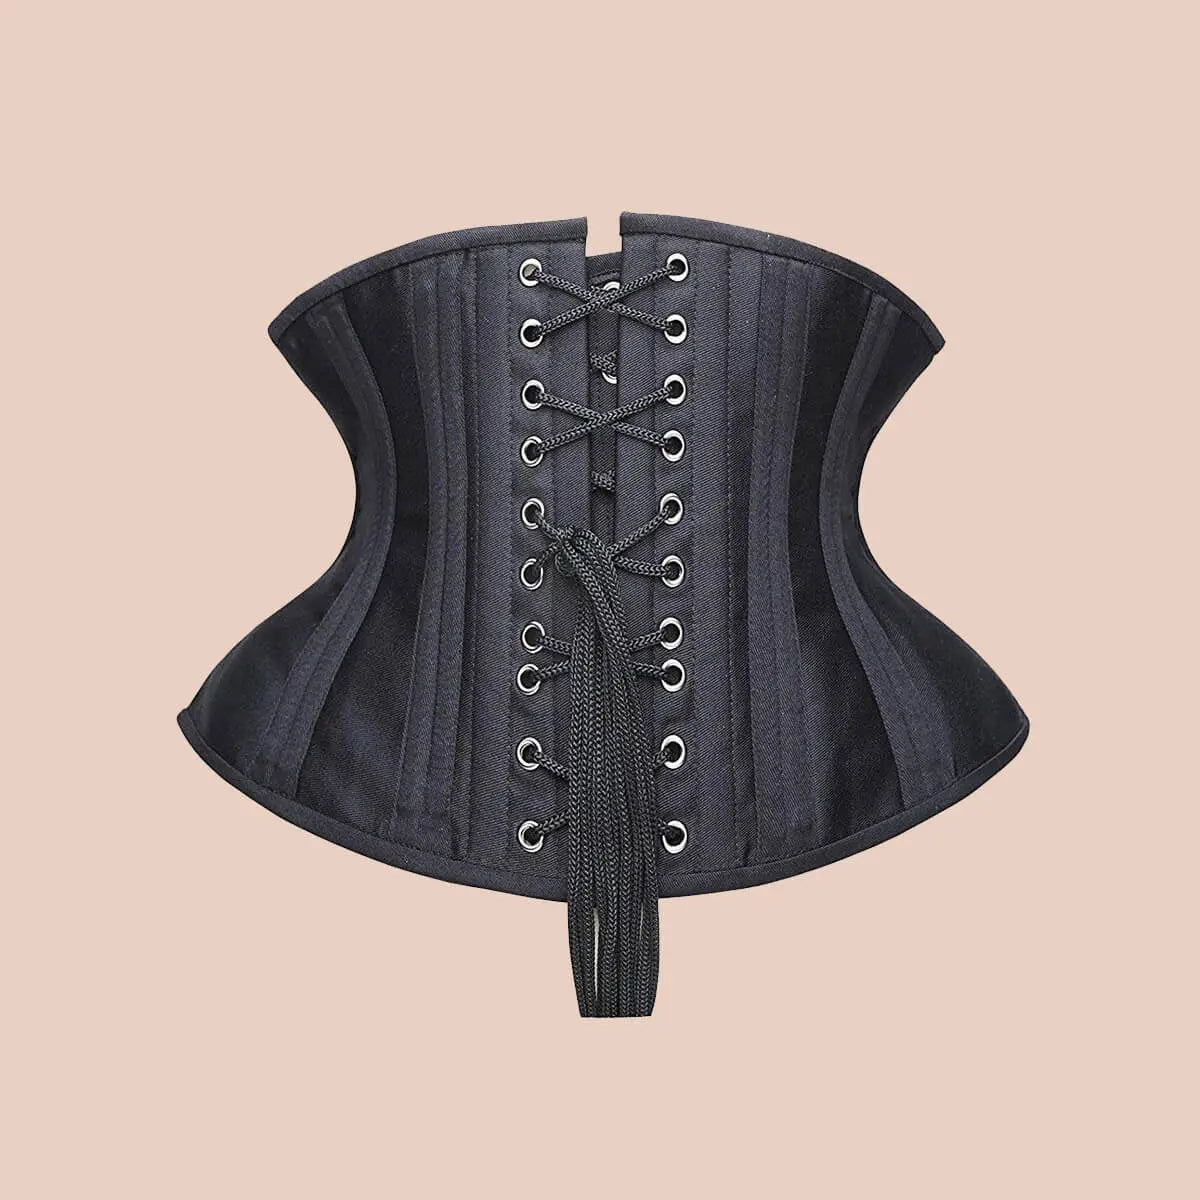 Bellatrix reviews ShaperX waist trainer steel boned corset